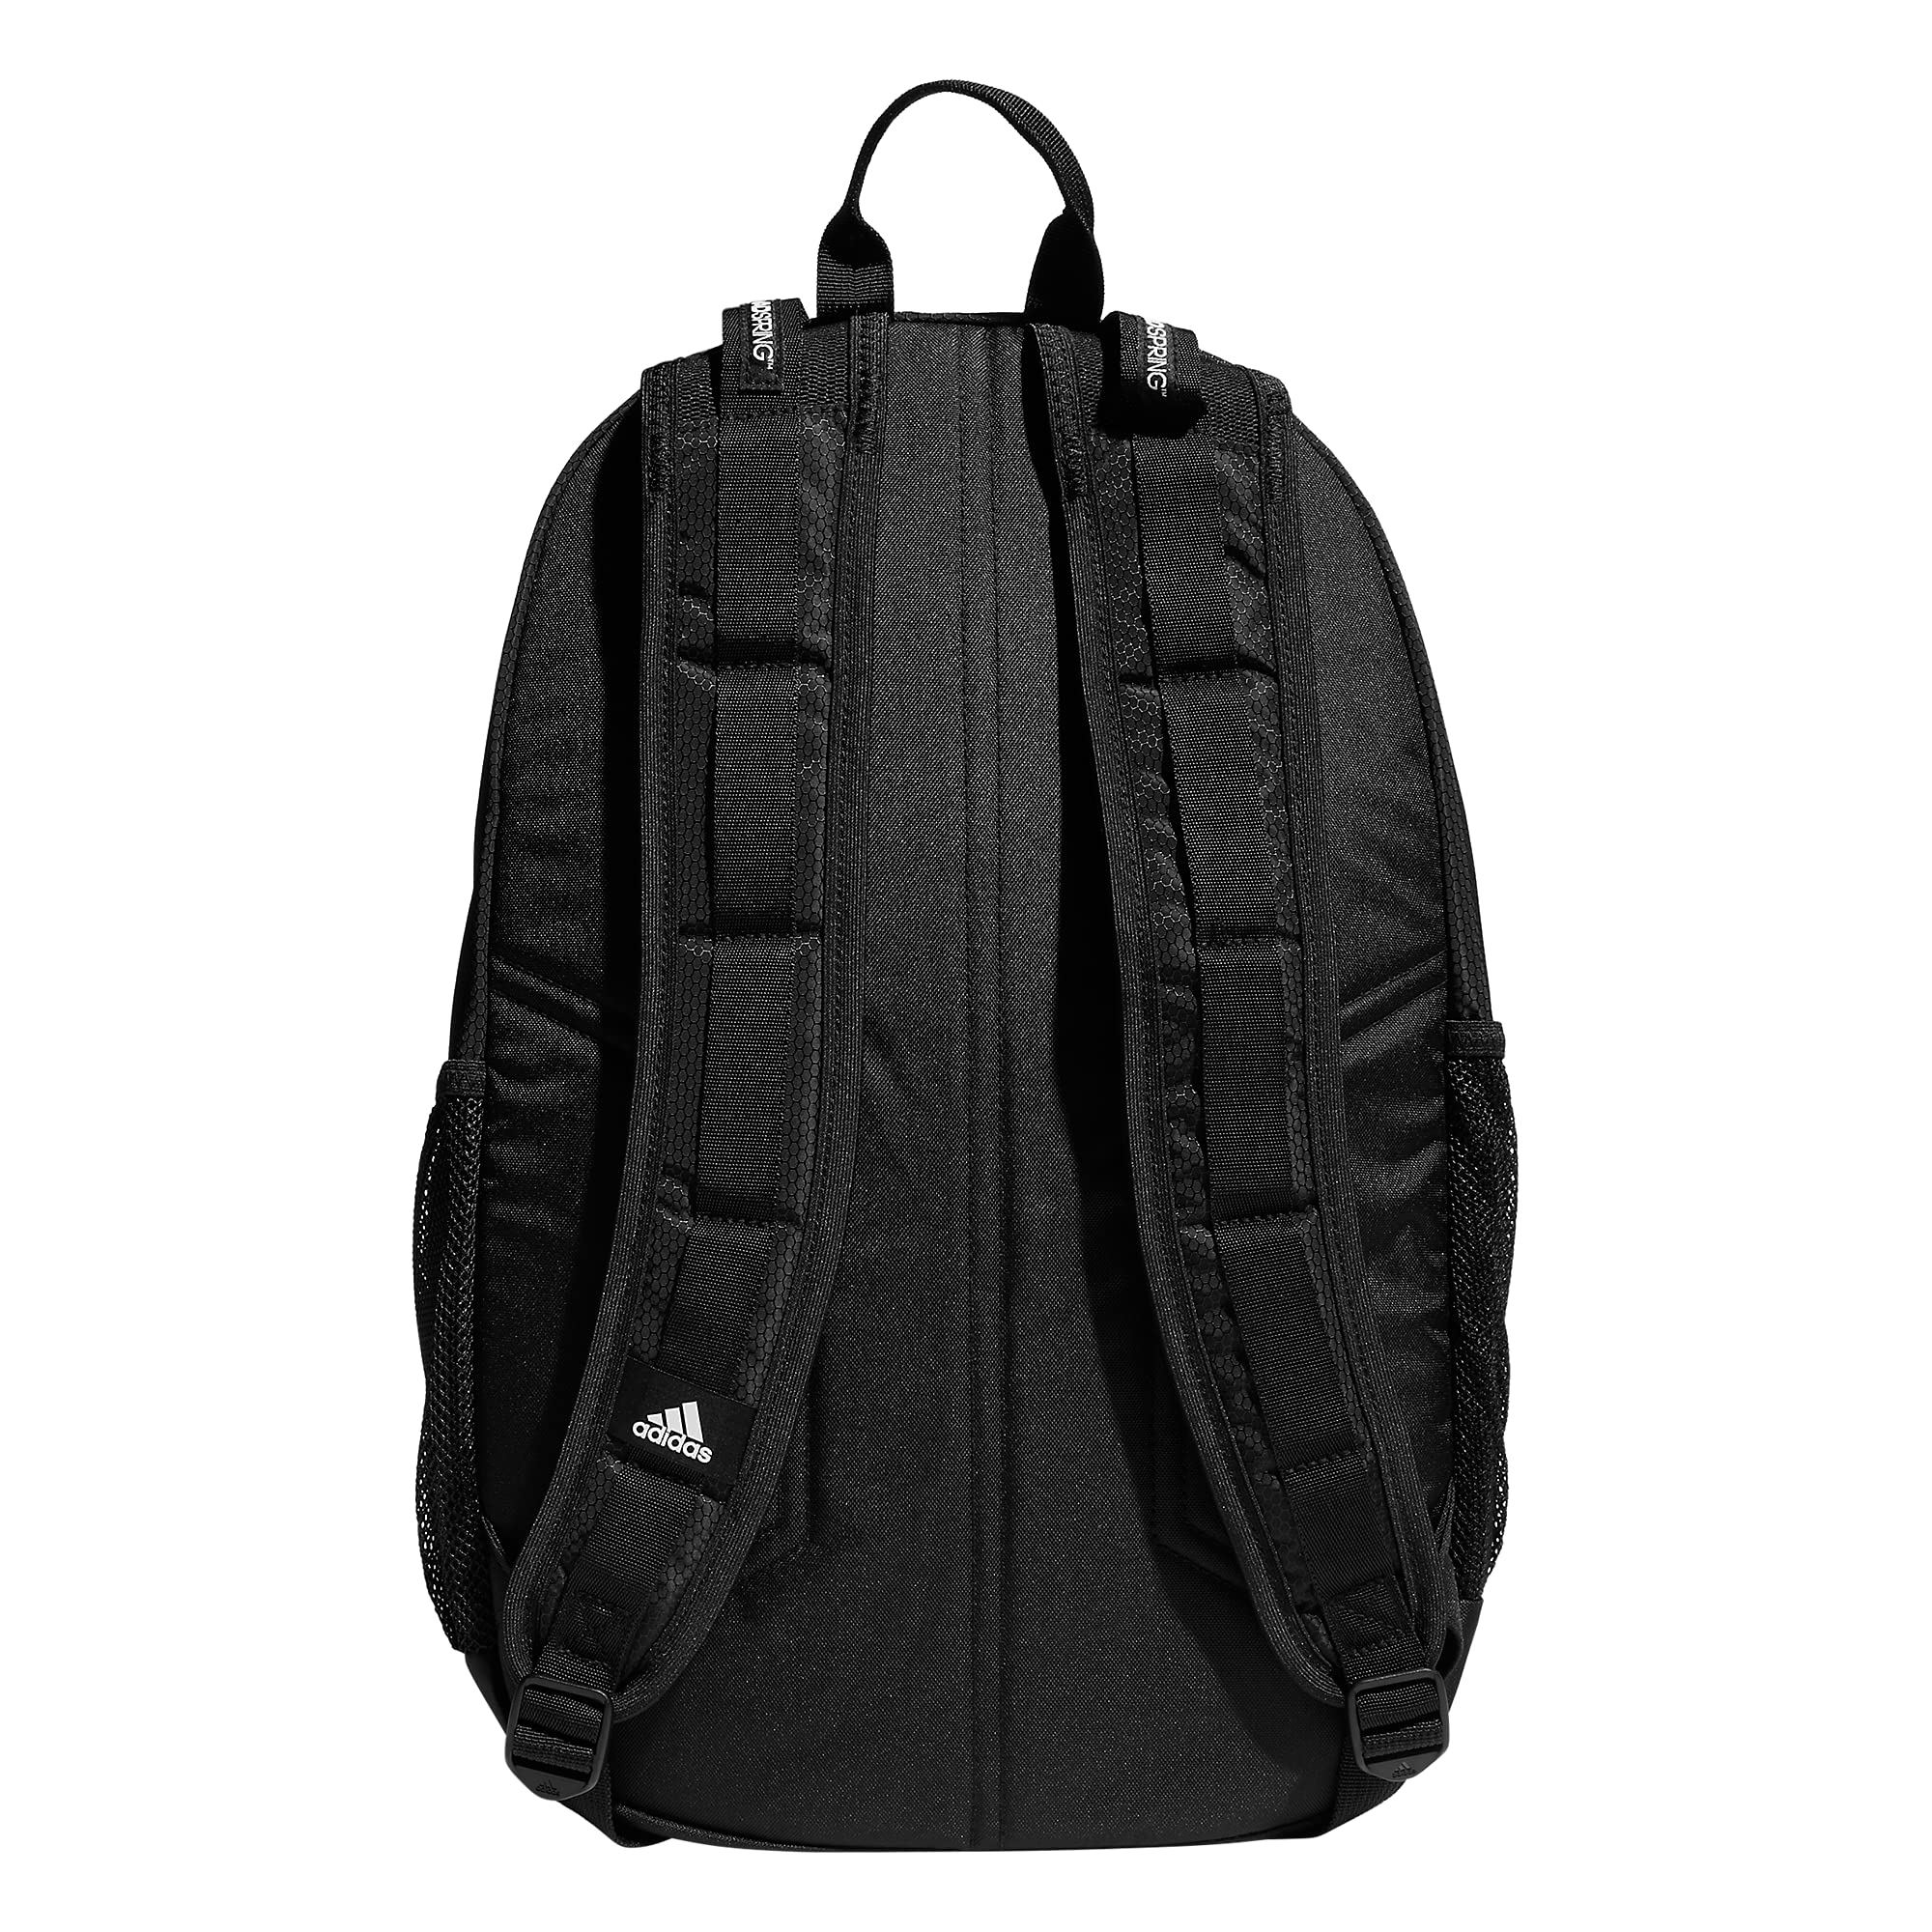 adidas Unisex-Adult Excel Backpack, Black/White, One Size